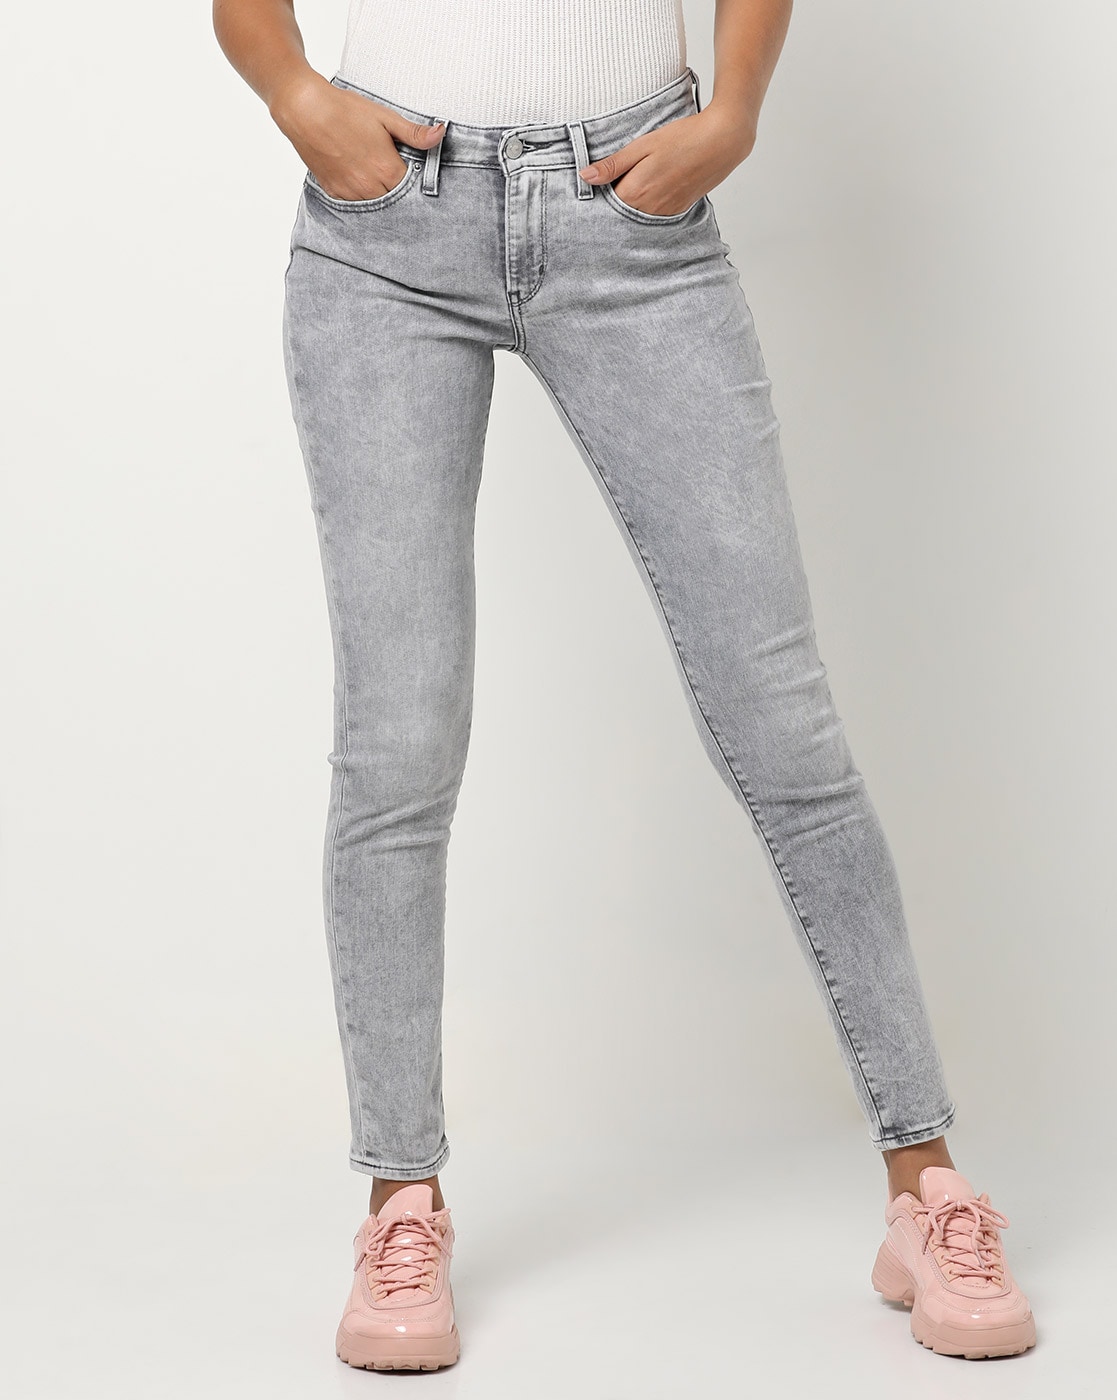 Women's Gray Levis Jeans on Women Guides